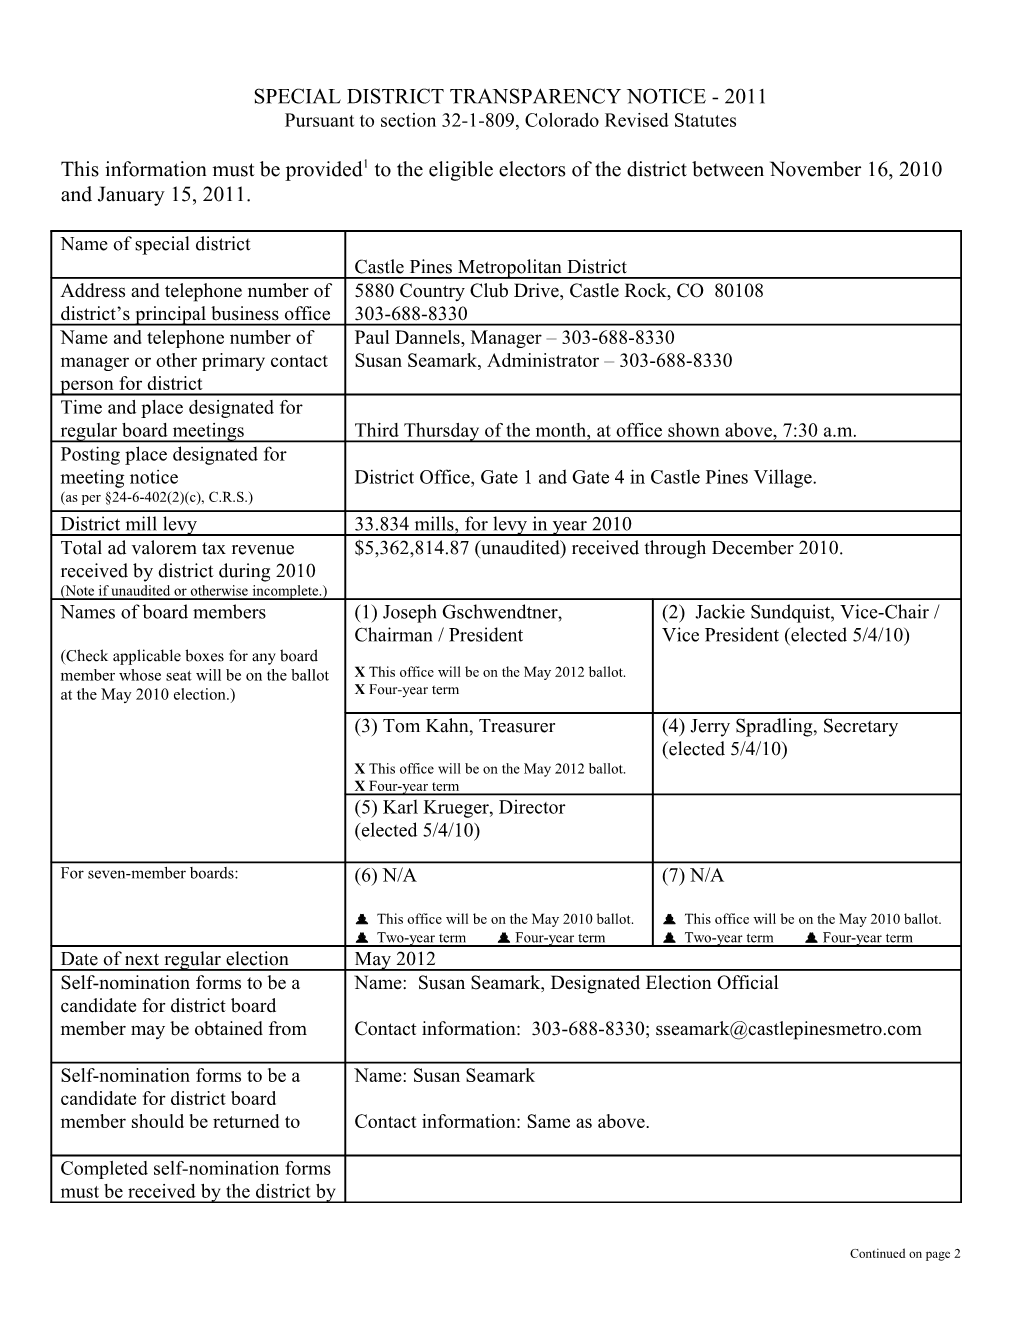 Special District Transparency Notice - 2010